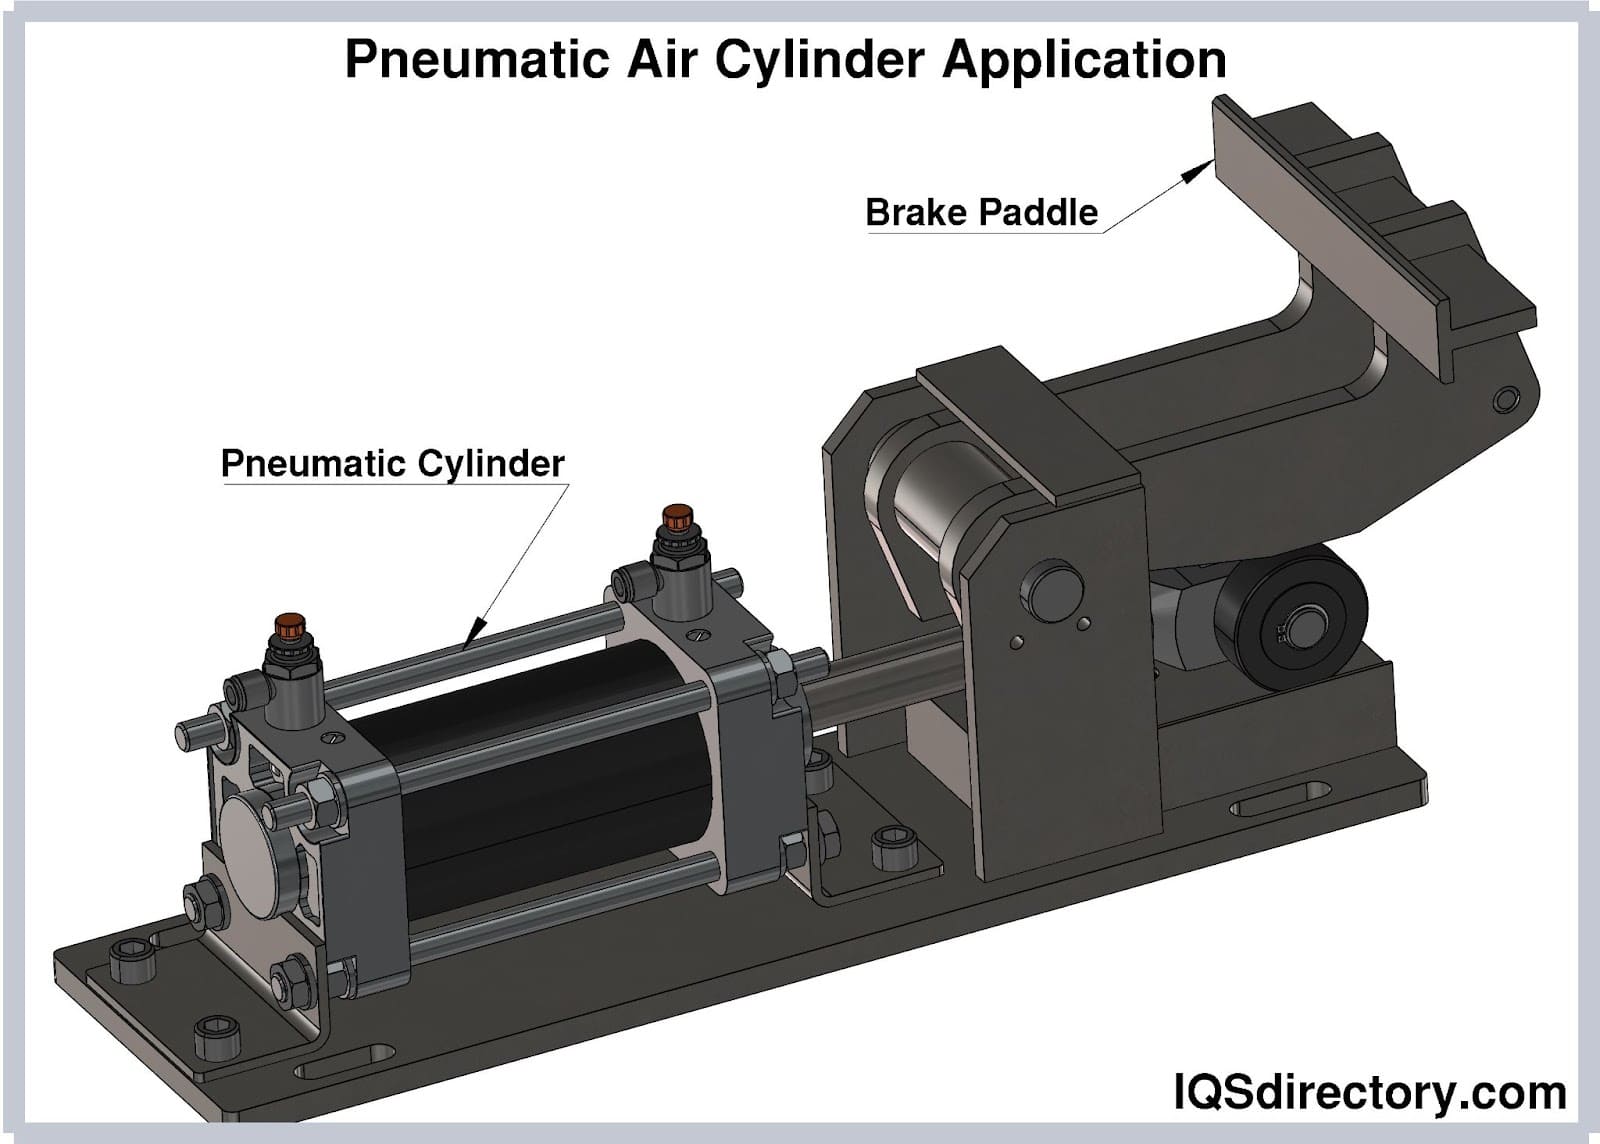 Pneumatic Air Cylinder Application